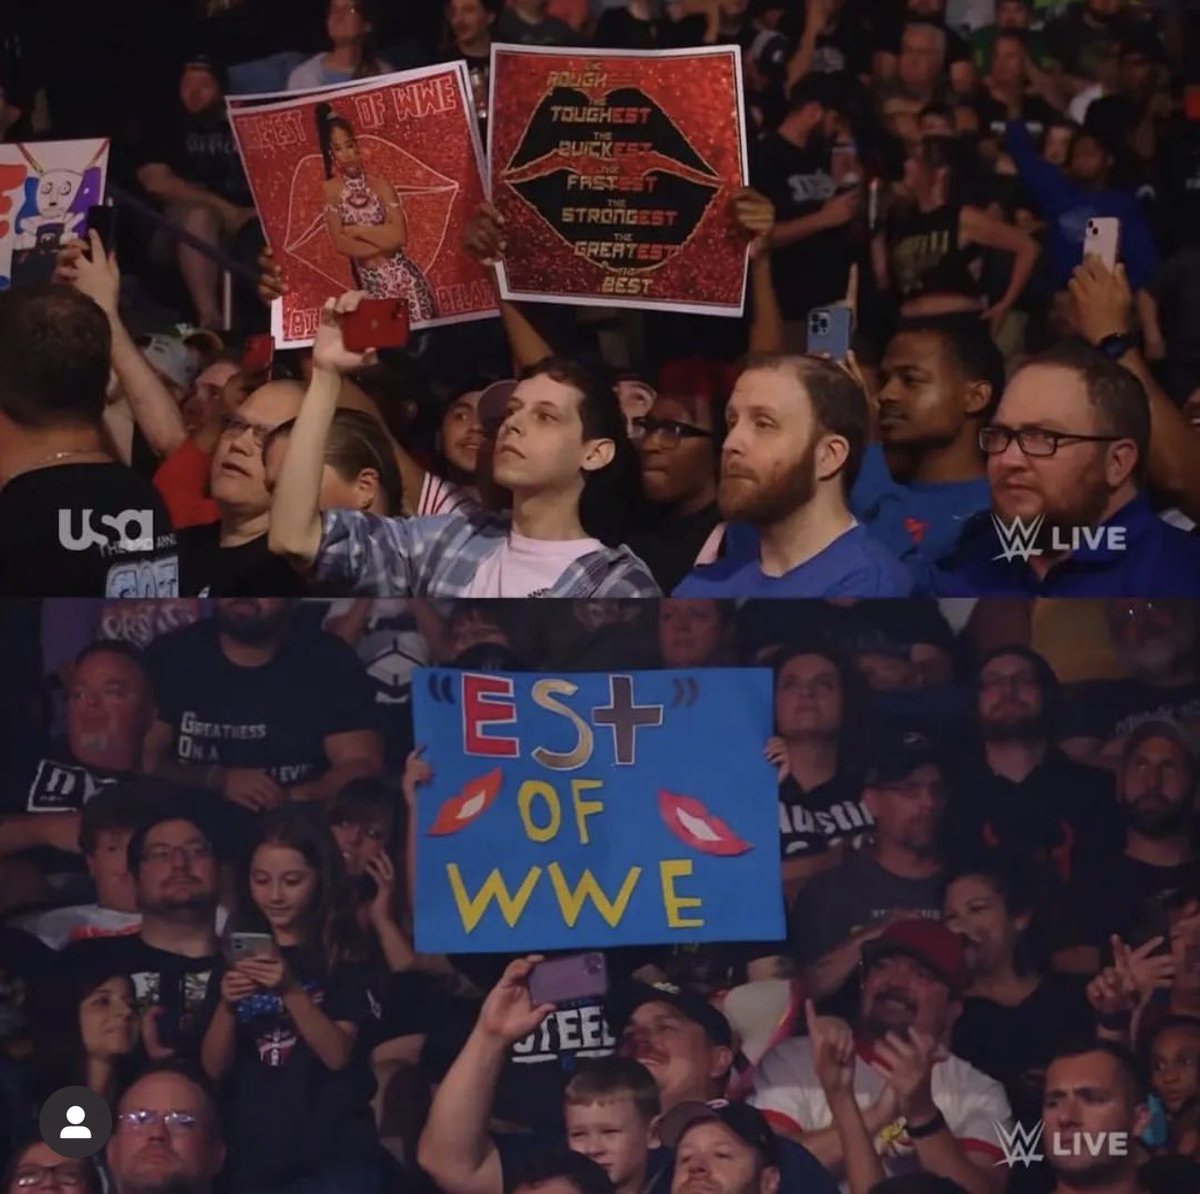 …because my fans are the bEST!
#WWEPittsburgh 
#ESTofWWE
#ESTies